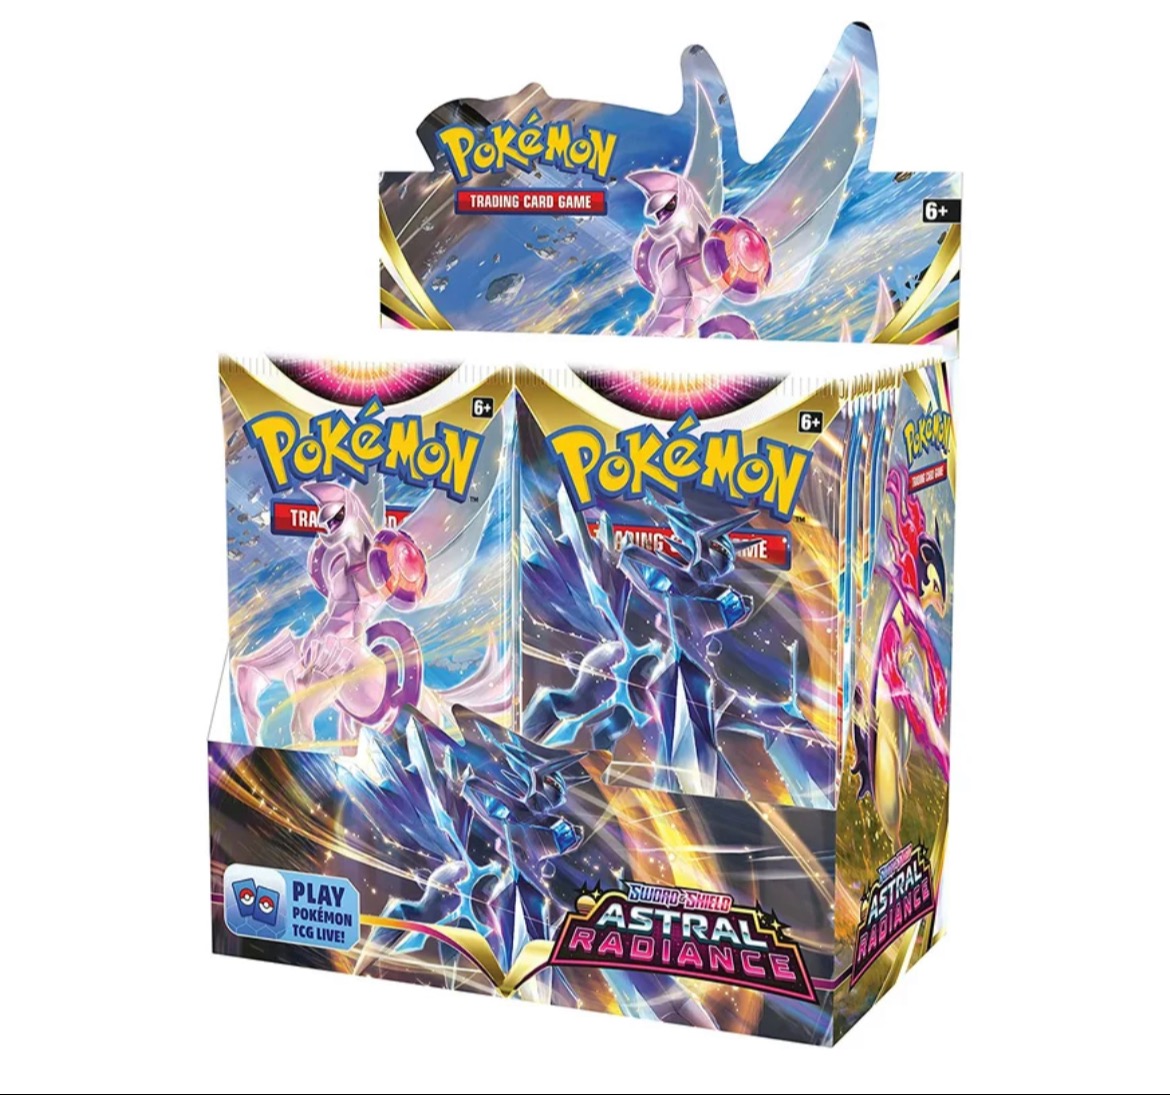 Pokémon TCG: Sword & Shield—Astral Radiance Booster Display Box (36 Packs)